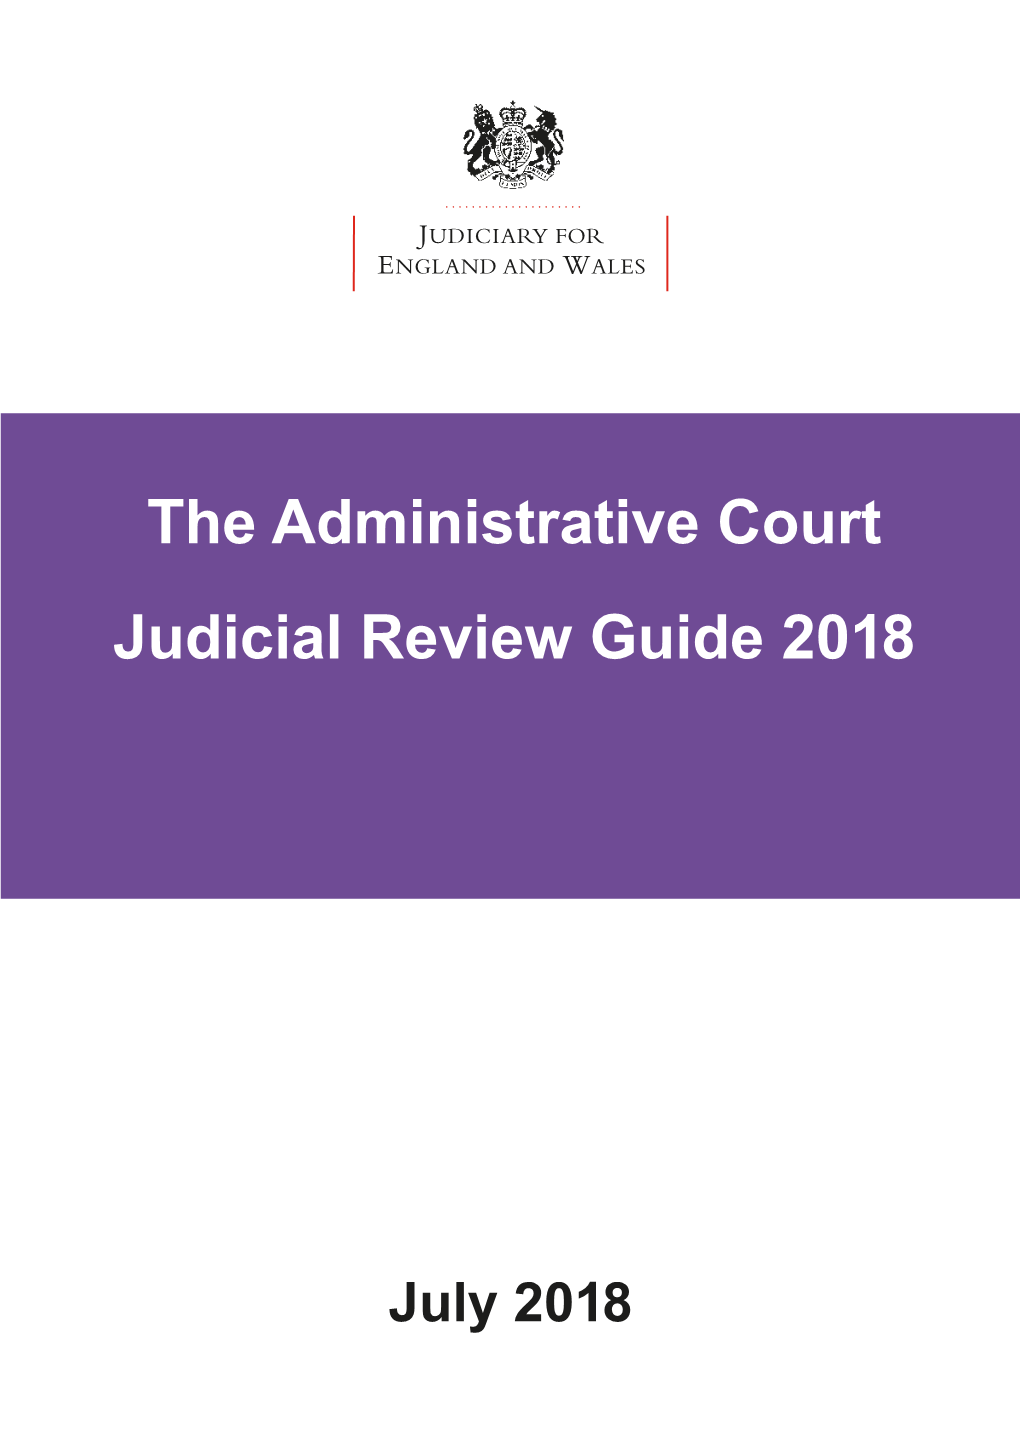 The Administrative Court Judicial Review Guide 2018